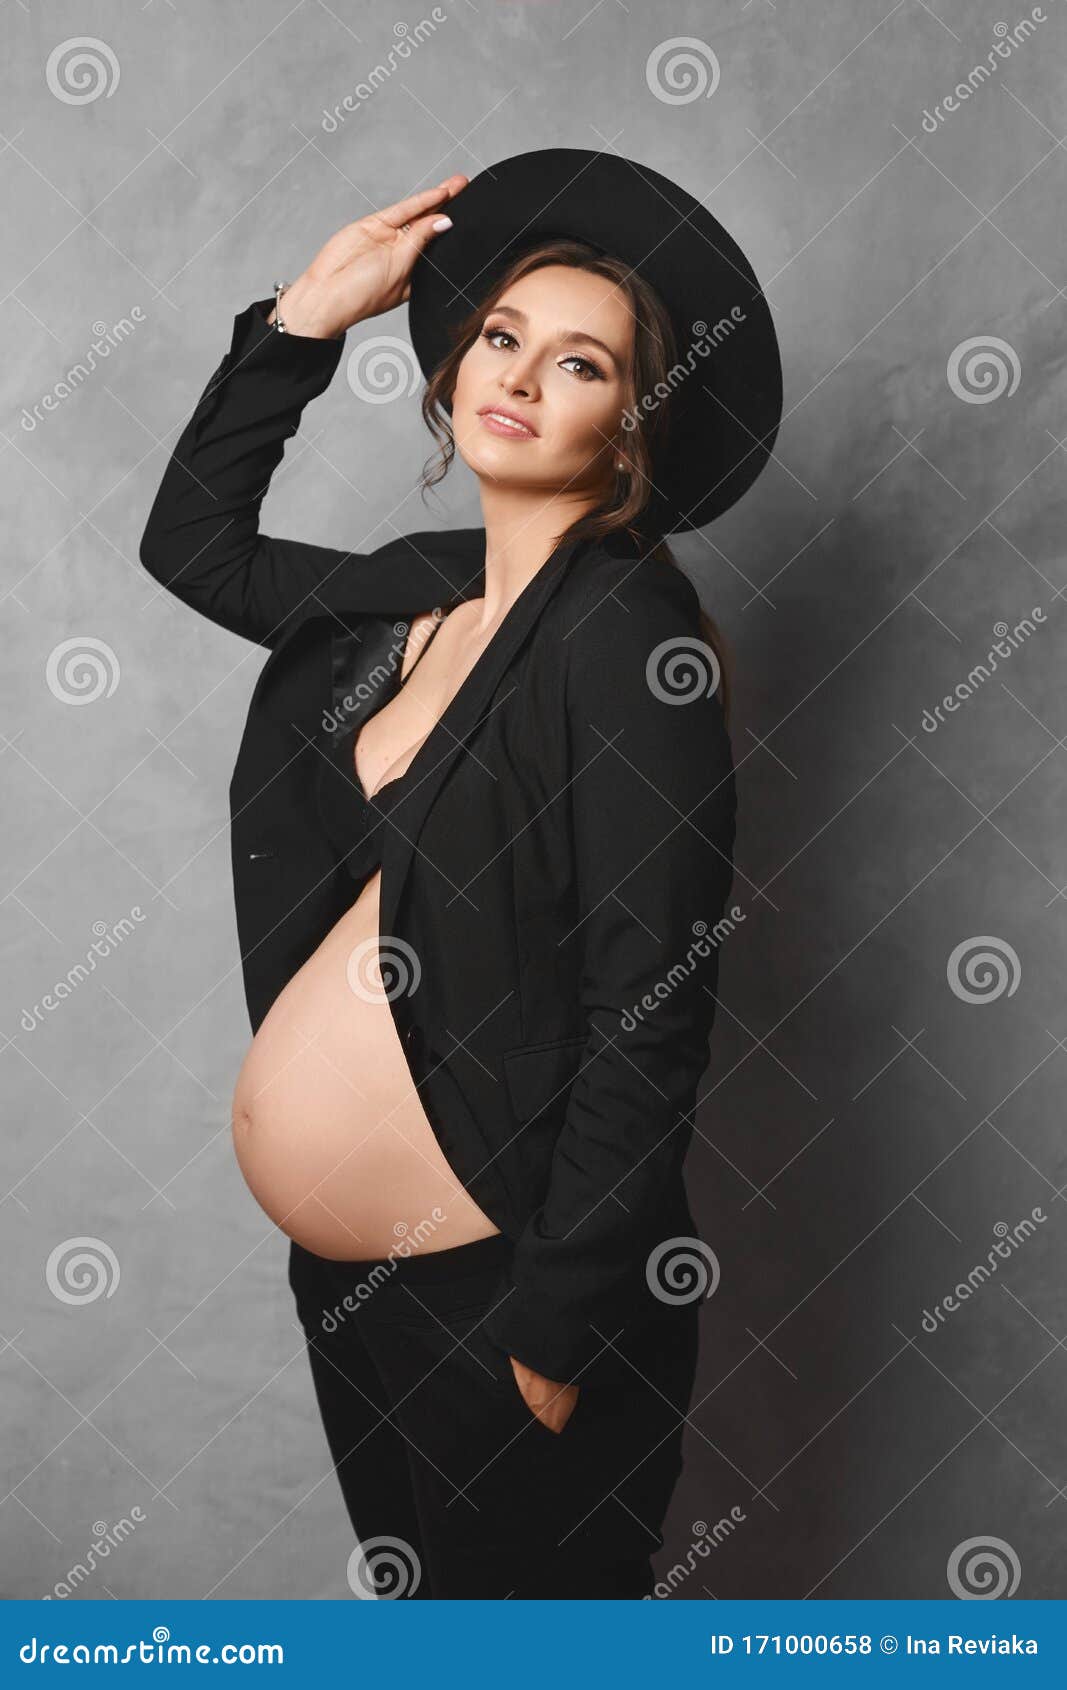 dan keim add photo tumblr pregnant lingerie